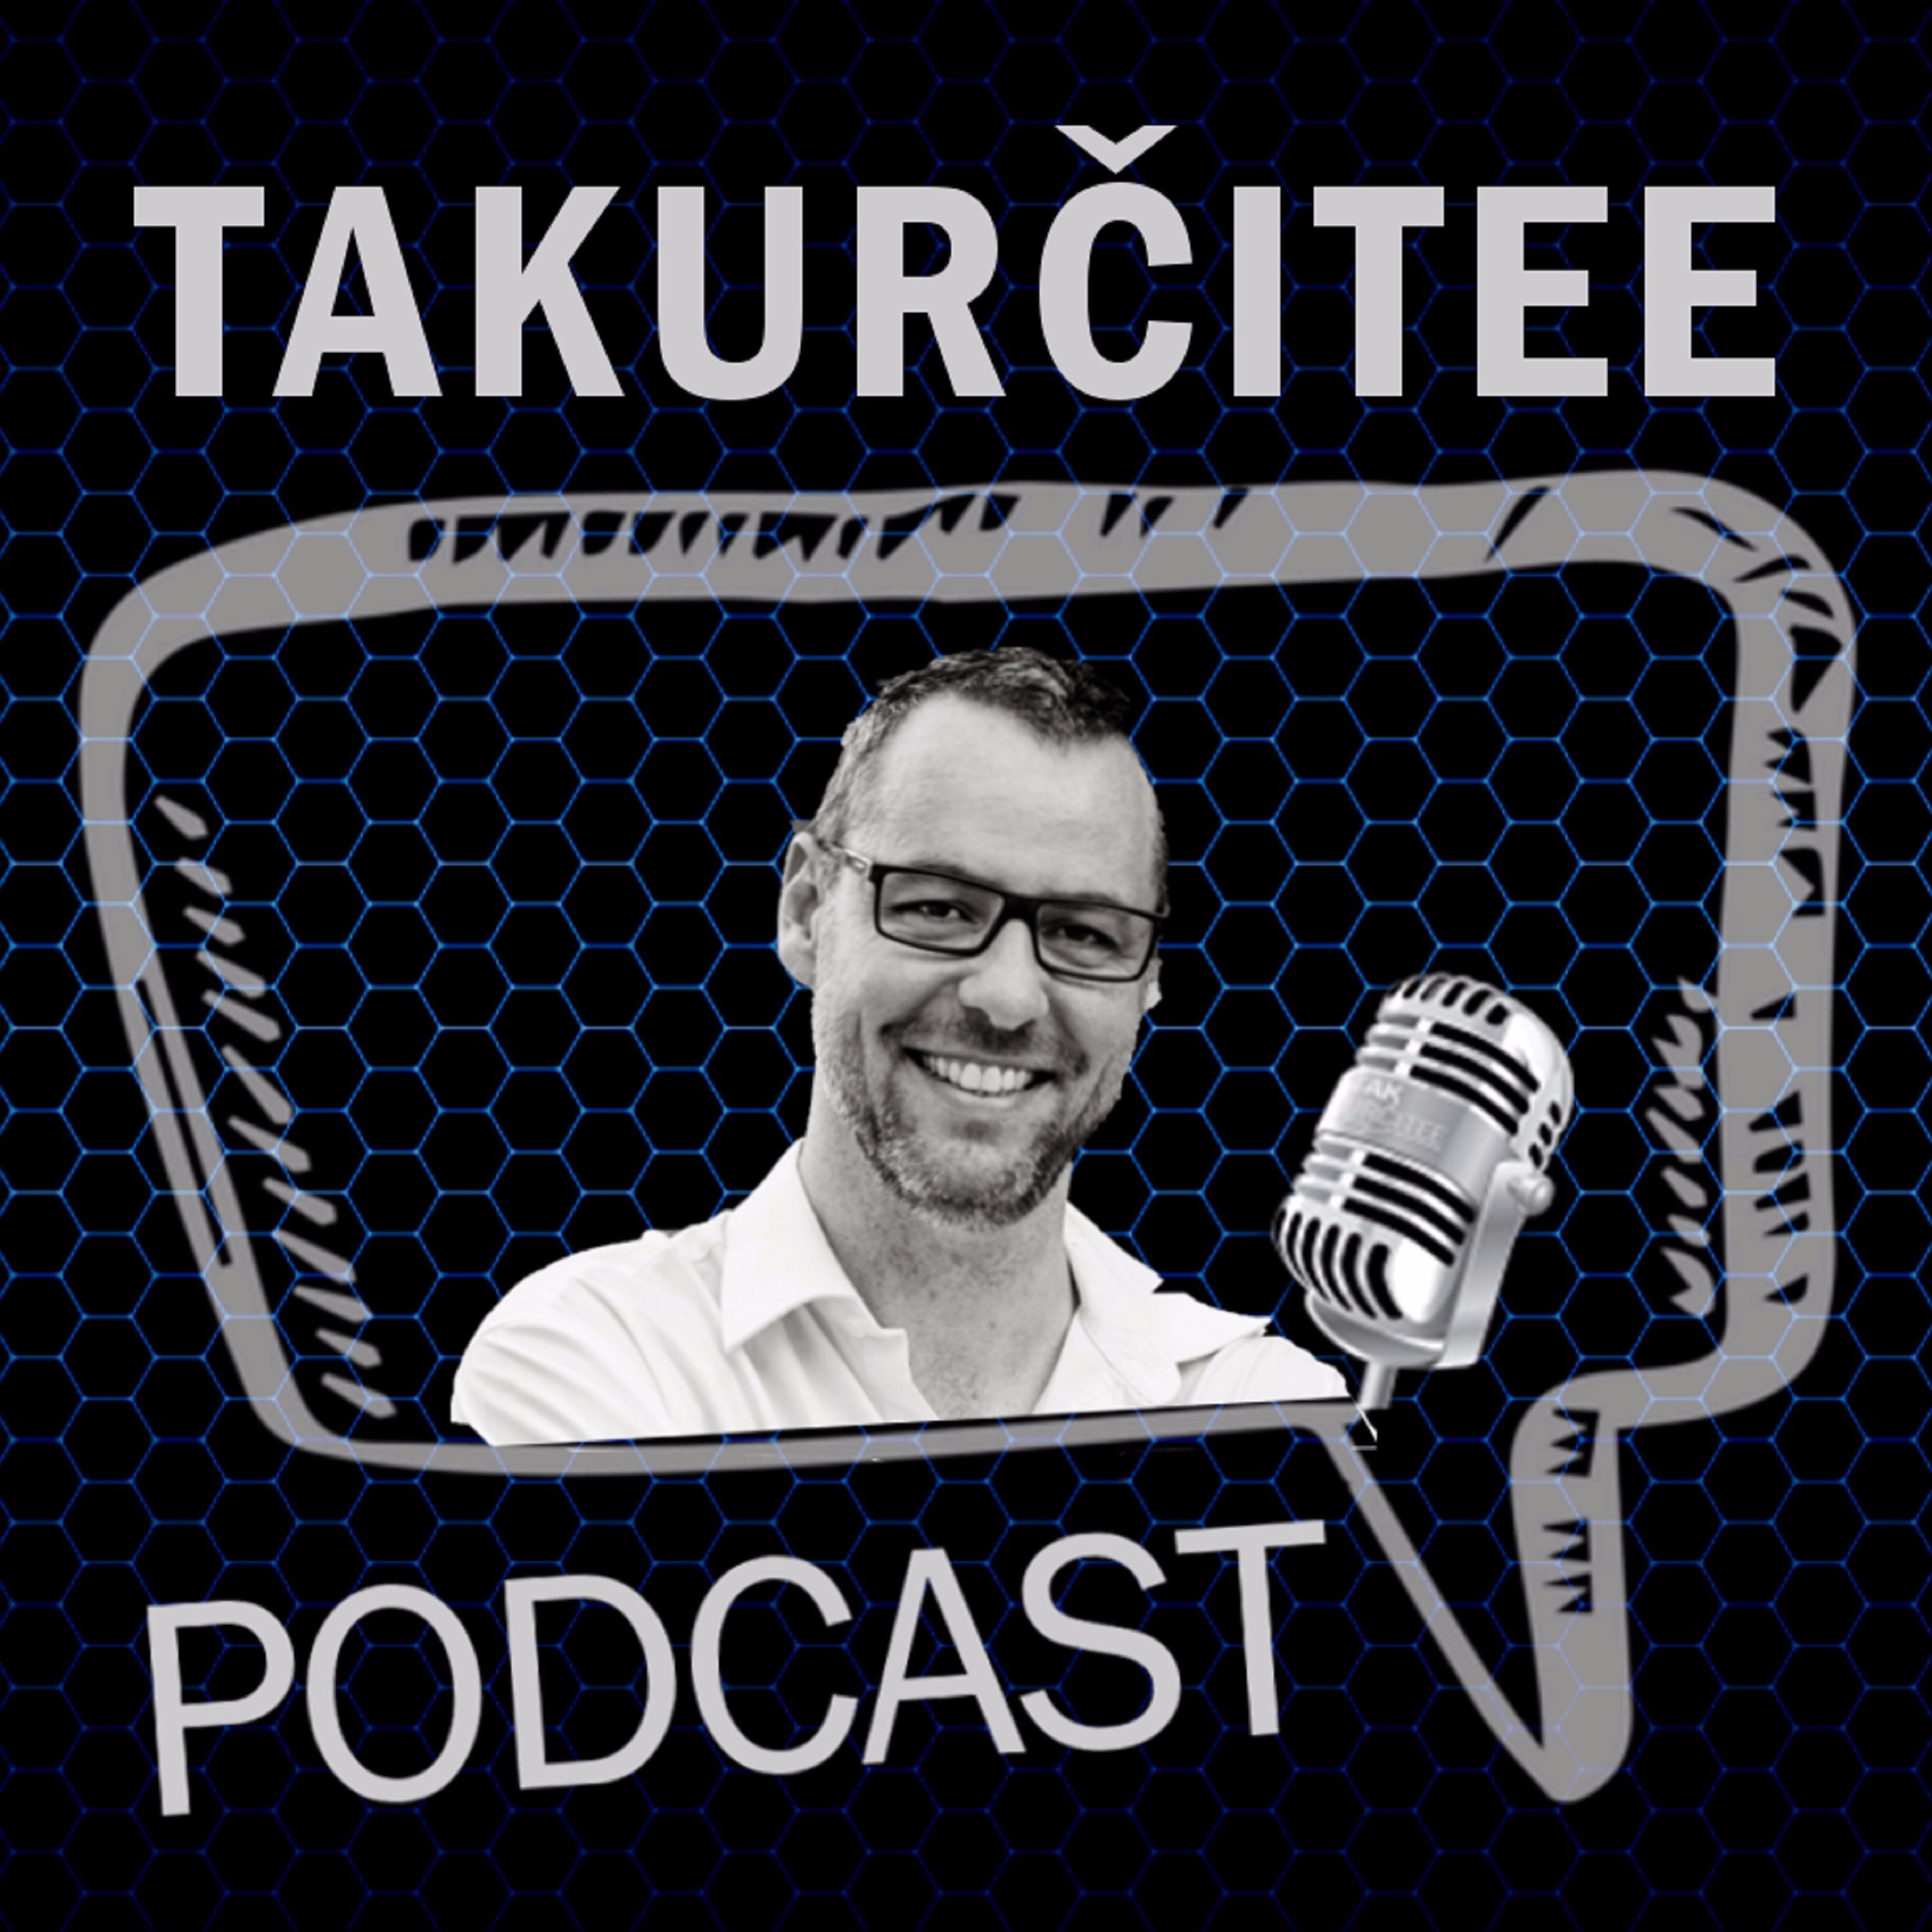 TakUrčitee Podcast, Ep. 41: Patrik Ziman, GM hokejového Slovana